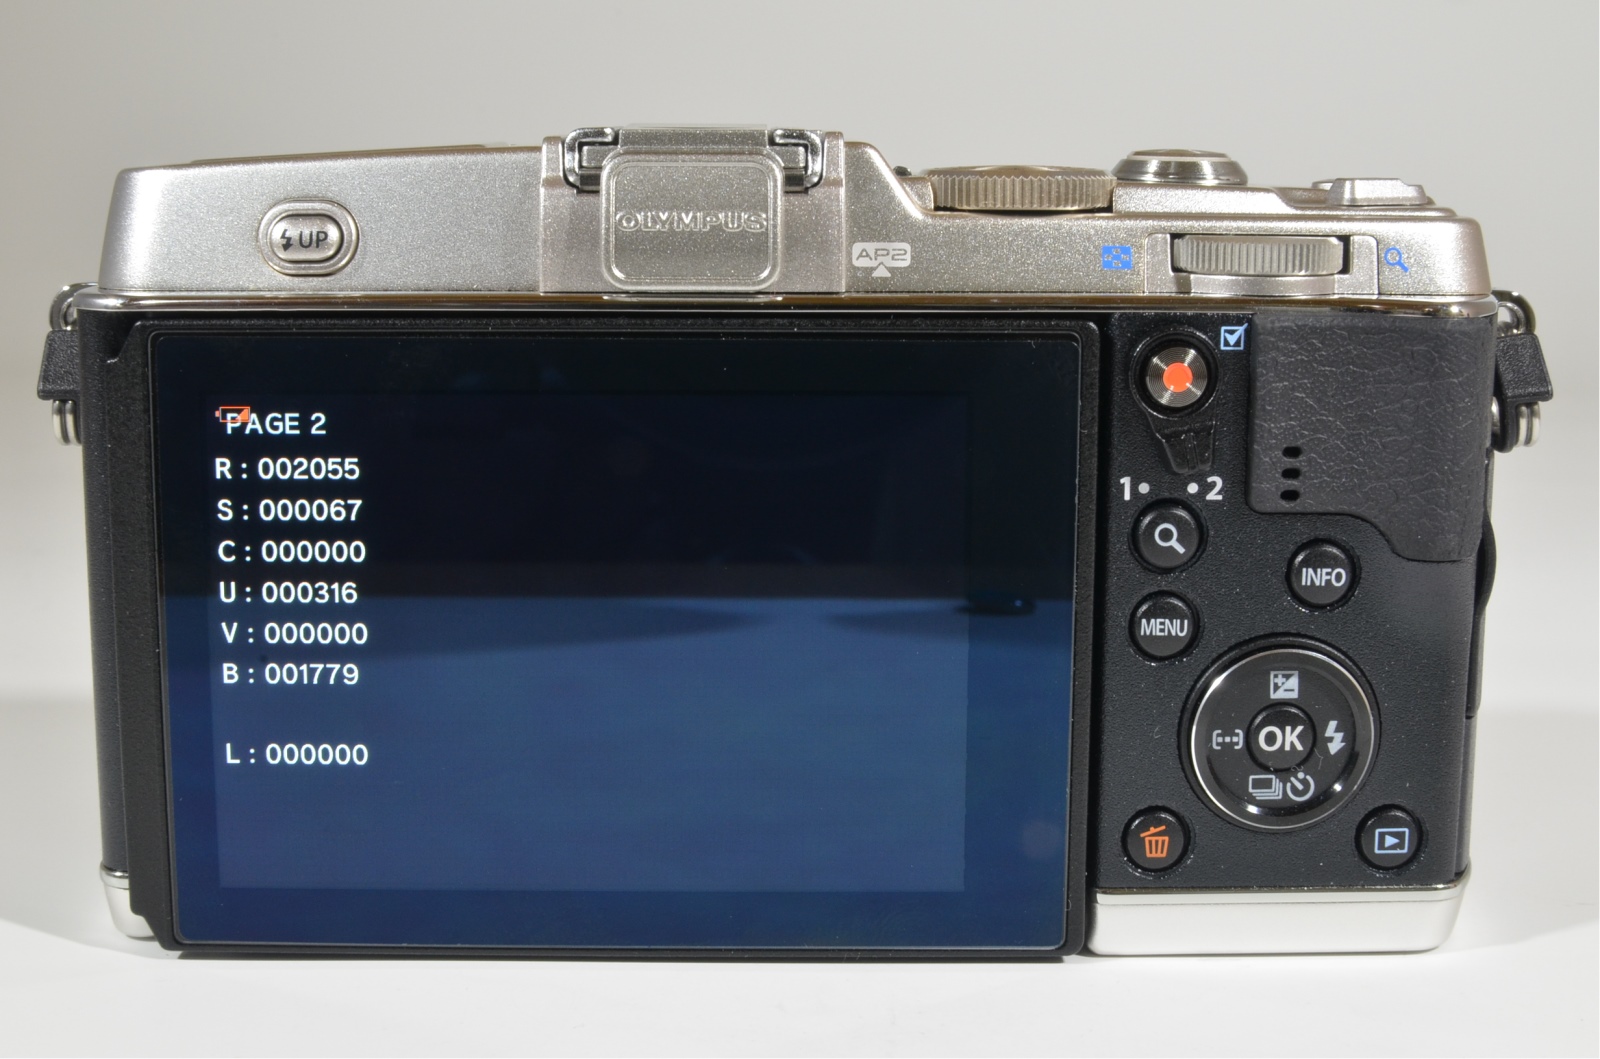 olympus pen e-p5 16mp mirrorless digital camera